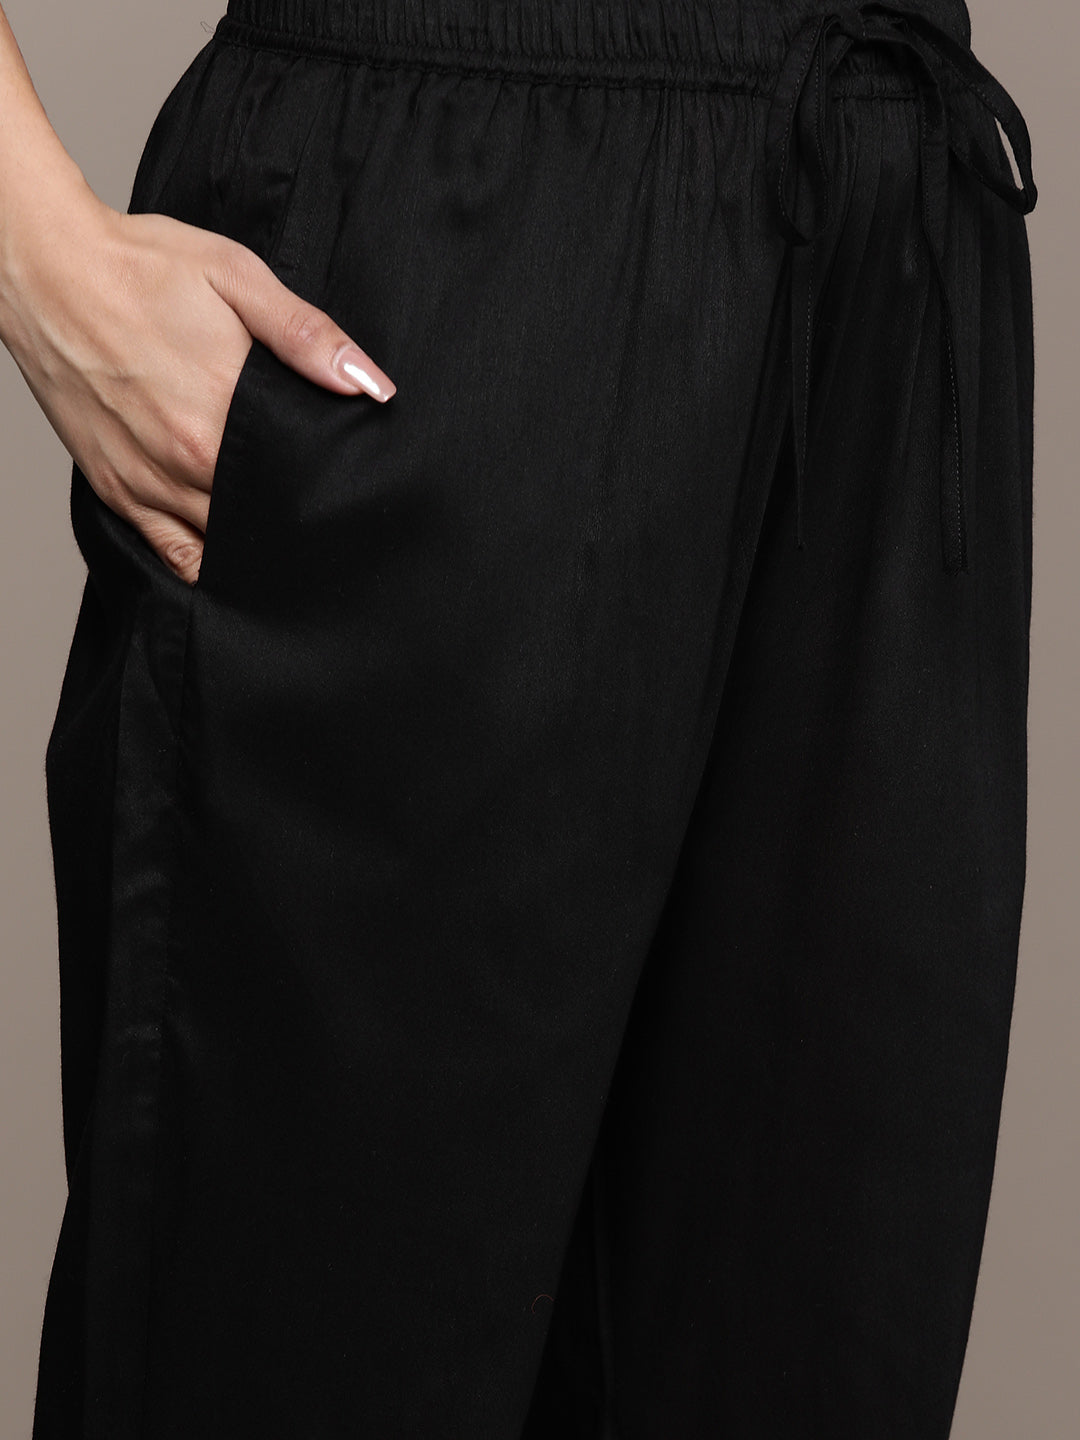 Ishin Women's Black Sequinned Embellished A-Line Kurta Trouser Dupatta Set